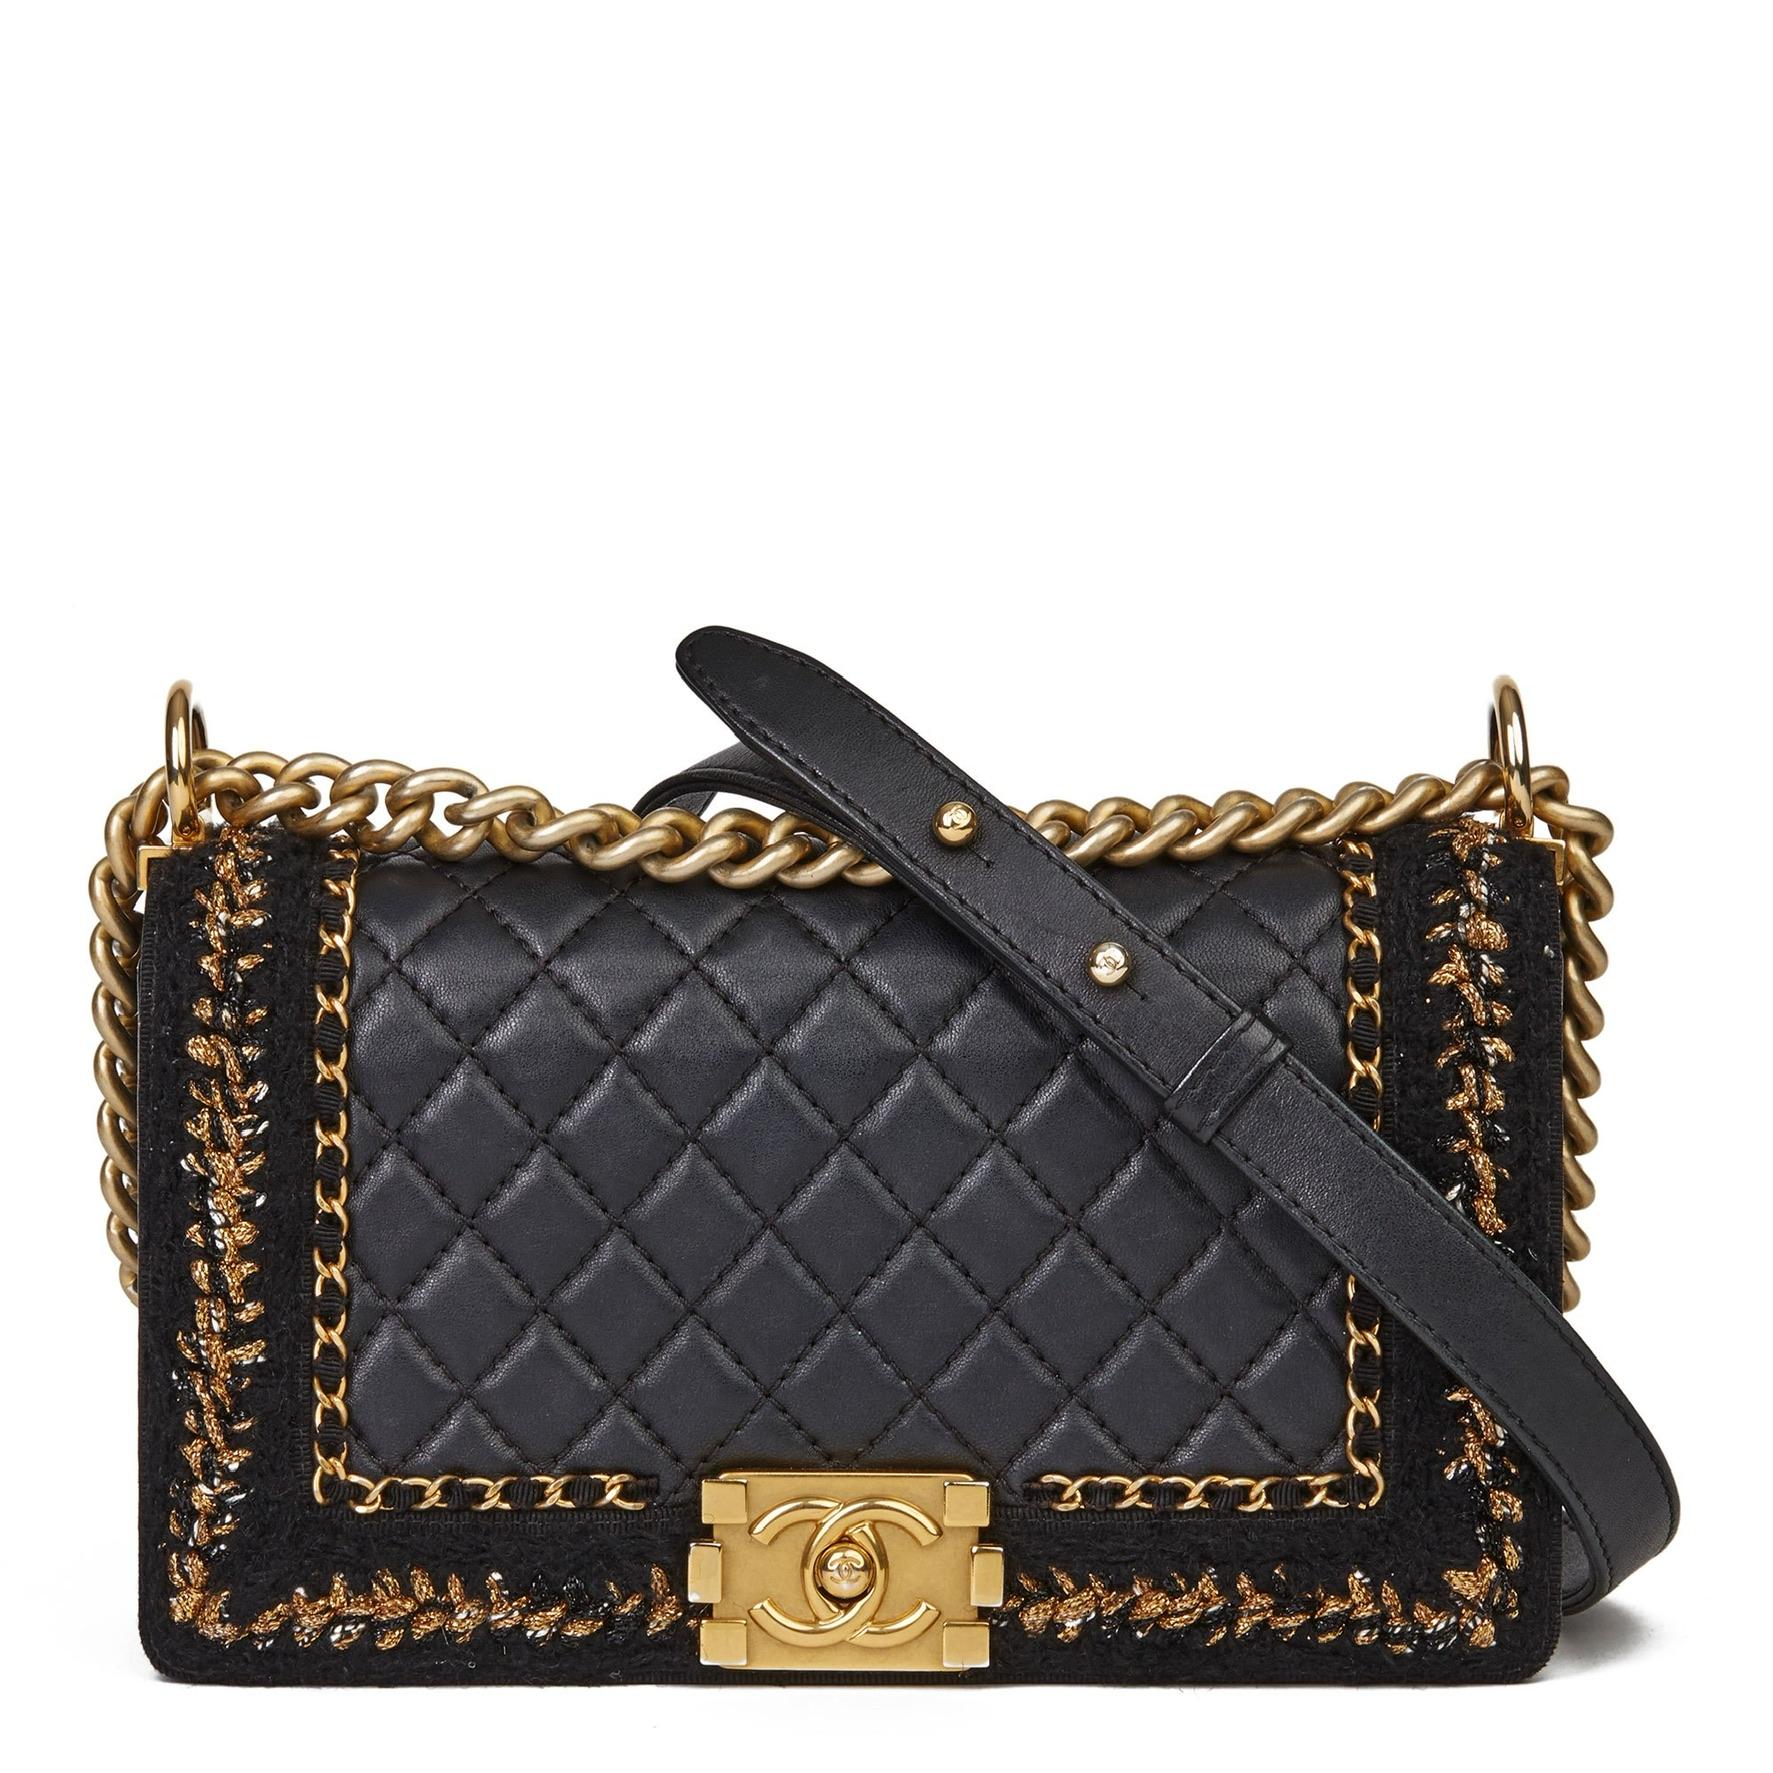 Chanel boy medium bag black and gold 3